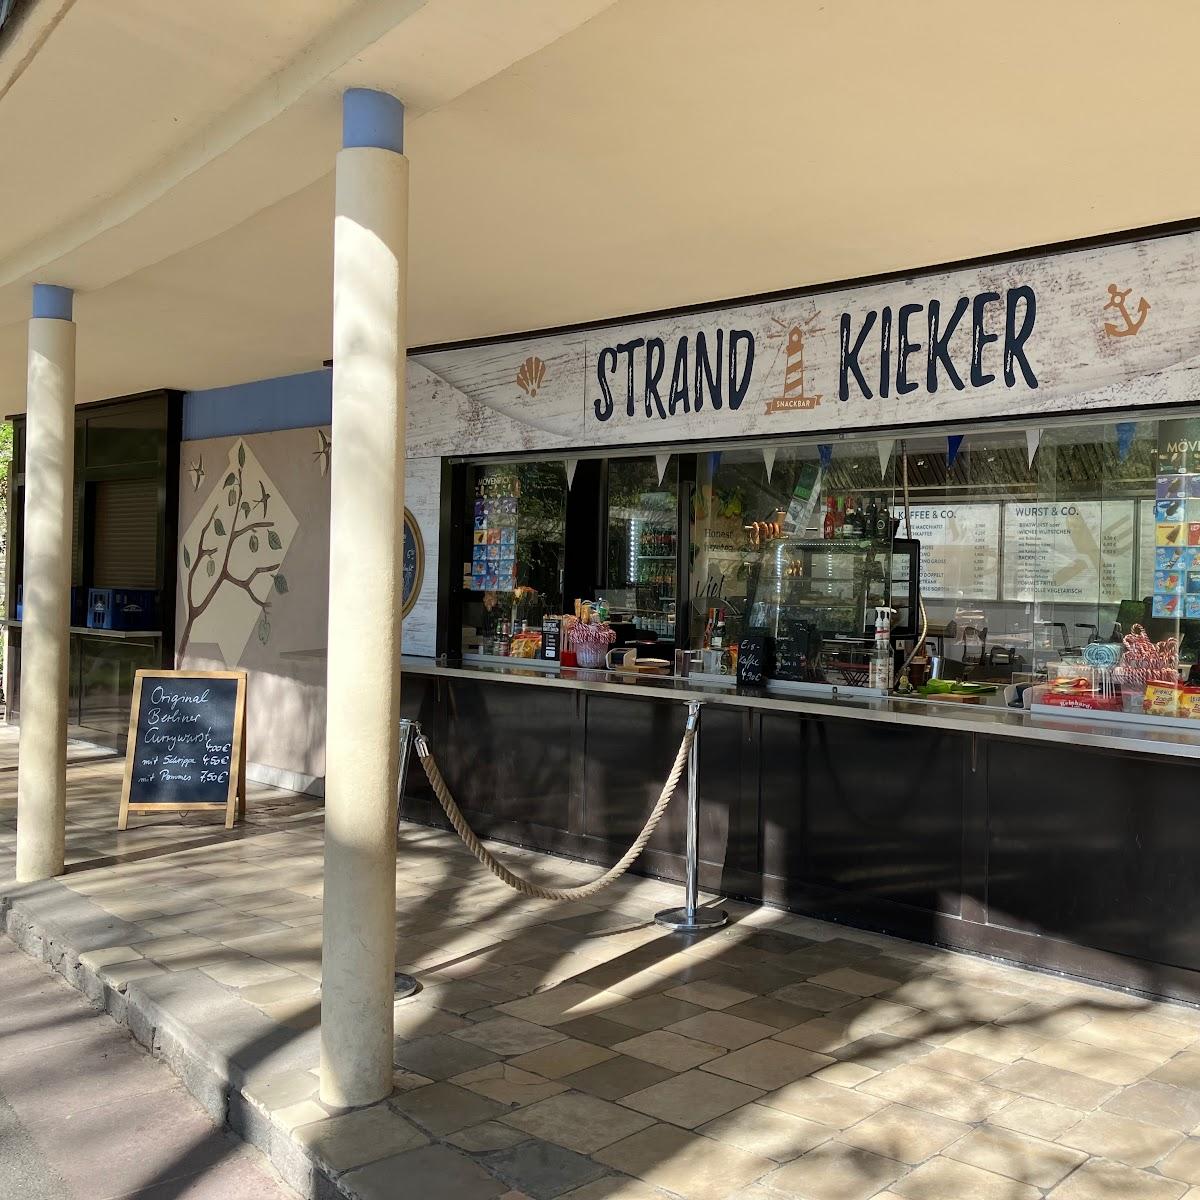 Restaurant "Strandkieker" in Berlin